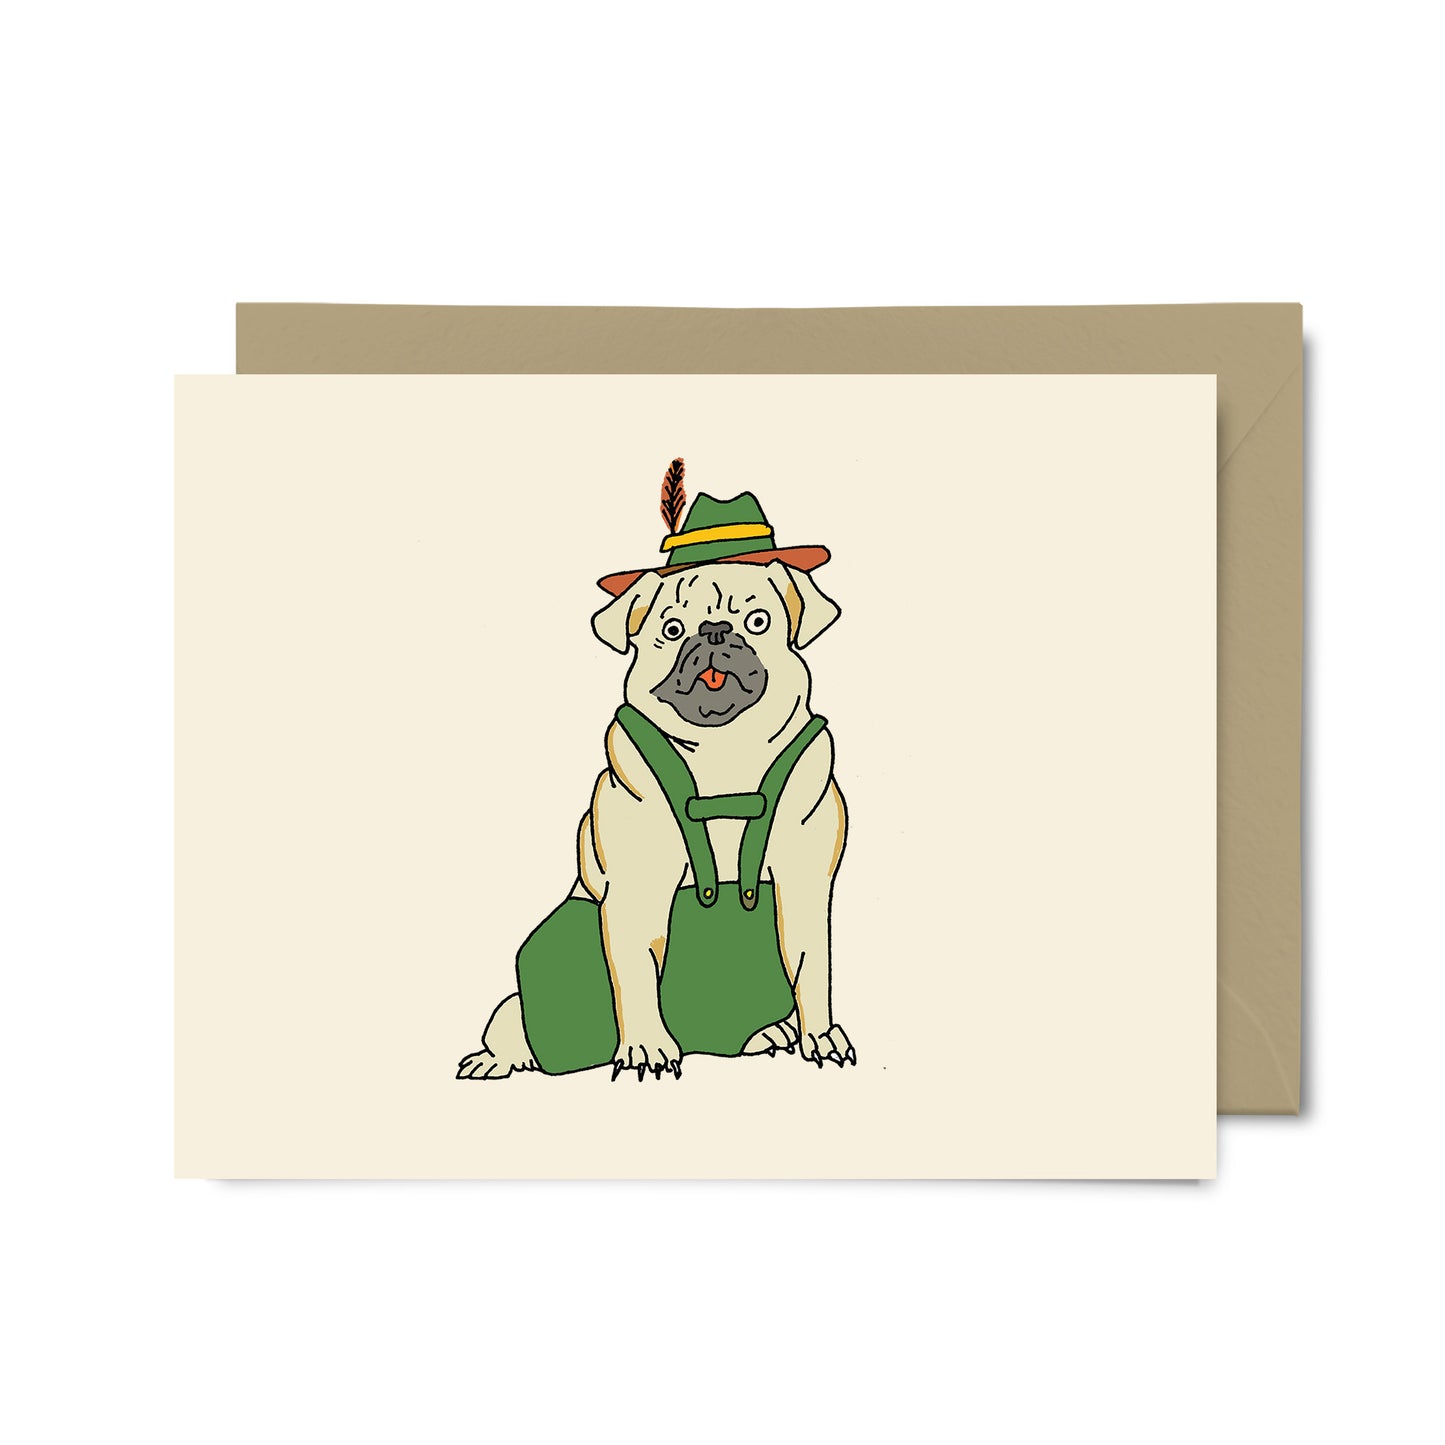 Pug in Lederhosen - Notecard Set